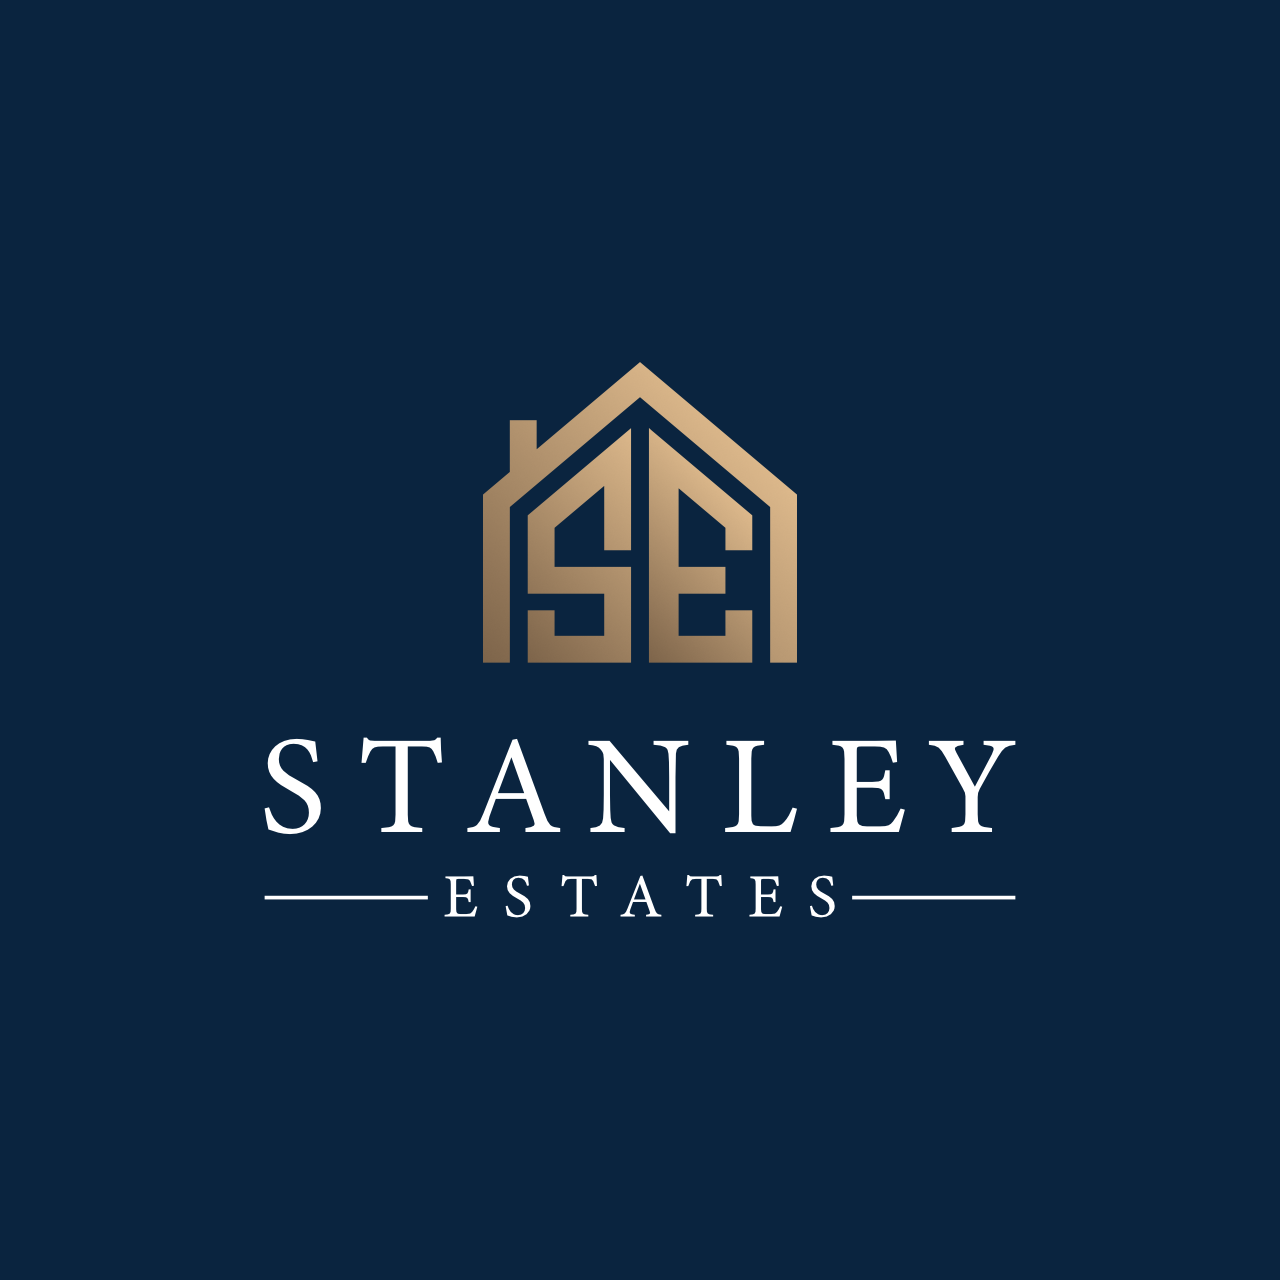 Stanley Estates Real Estate Agency in Bangalore, India